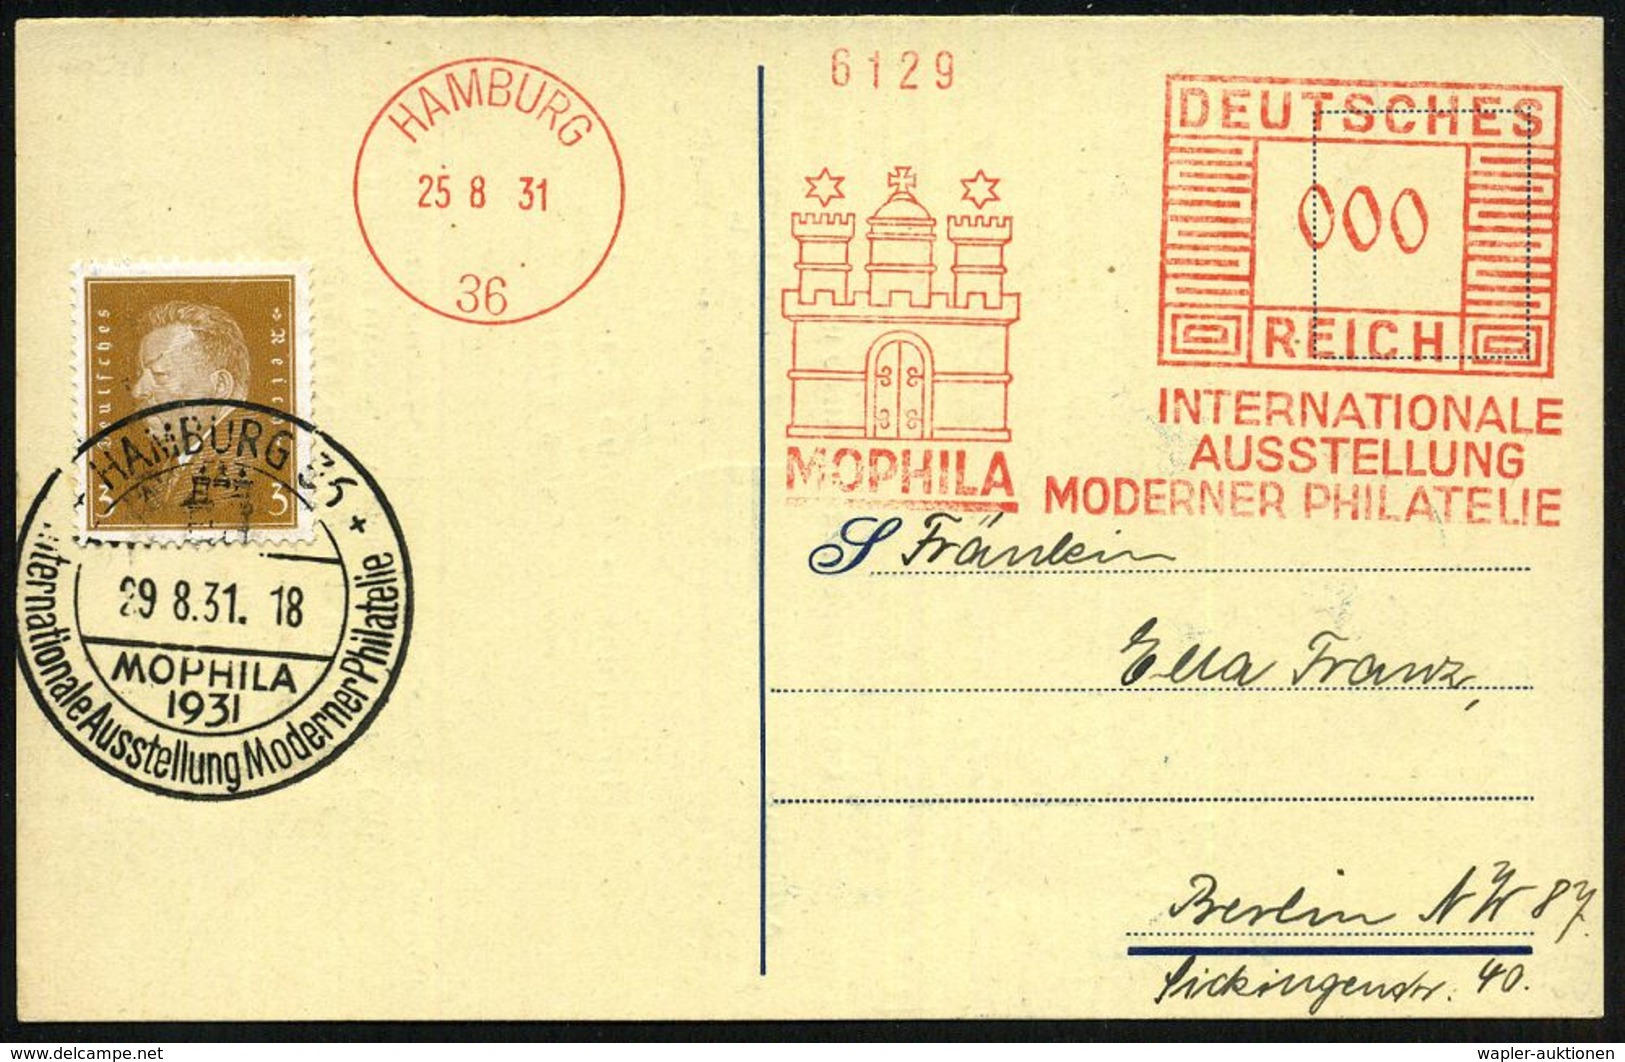 HAMBURG/ 36/ MOPHILA/ INT./ AUSSTELLUNG/ MODERNER PHILATELIE 1931 (29.8.) AFS 000 Pf. + SSt.: HAMBURG 36/MOPHILA.. (Bo.4 - Expositions Philatéliques